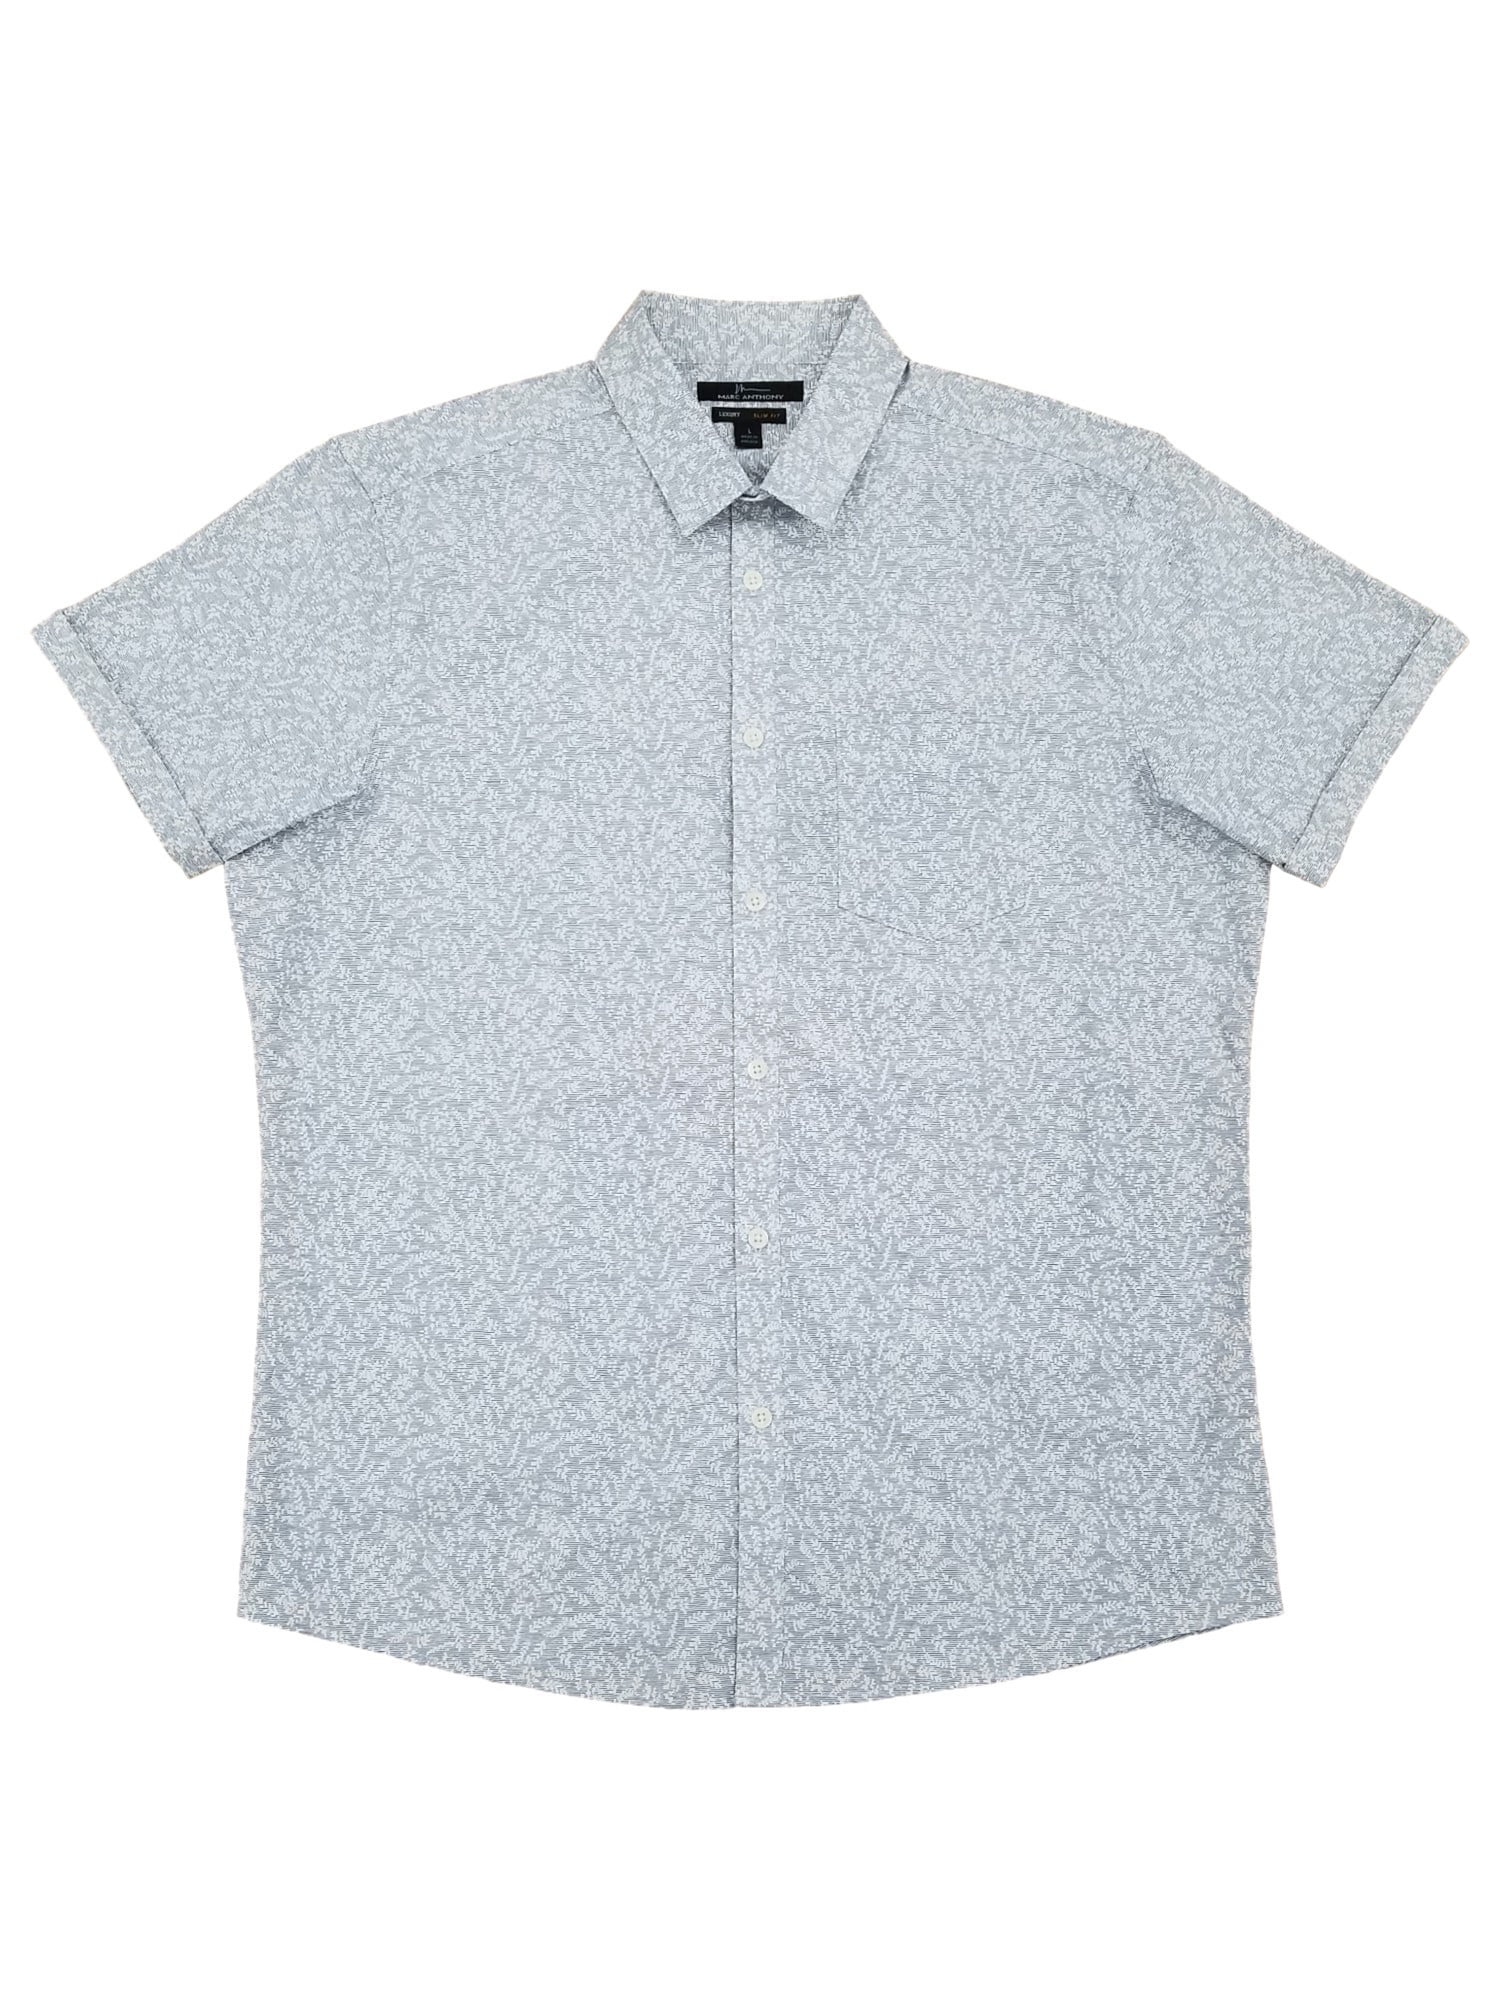 mens marc anthony Polo shirt XL Slim Fit Short Sleeve NWT Cotton 